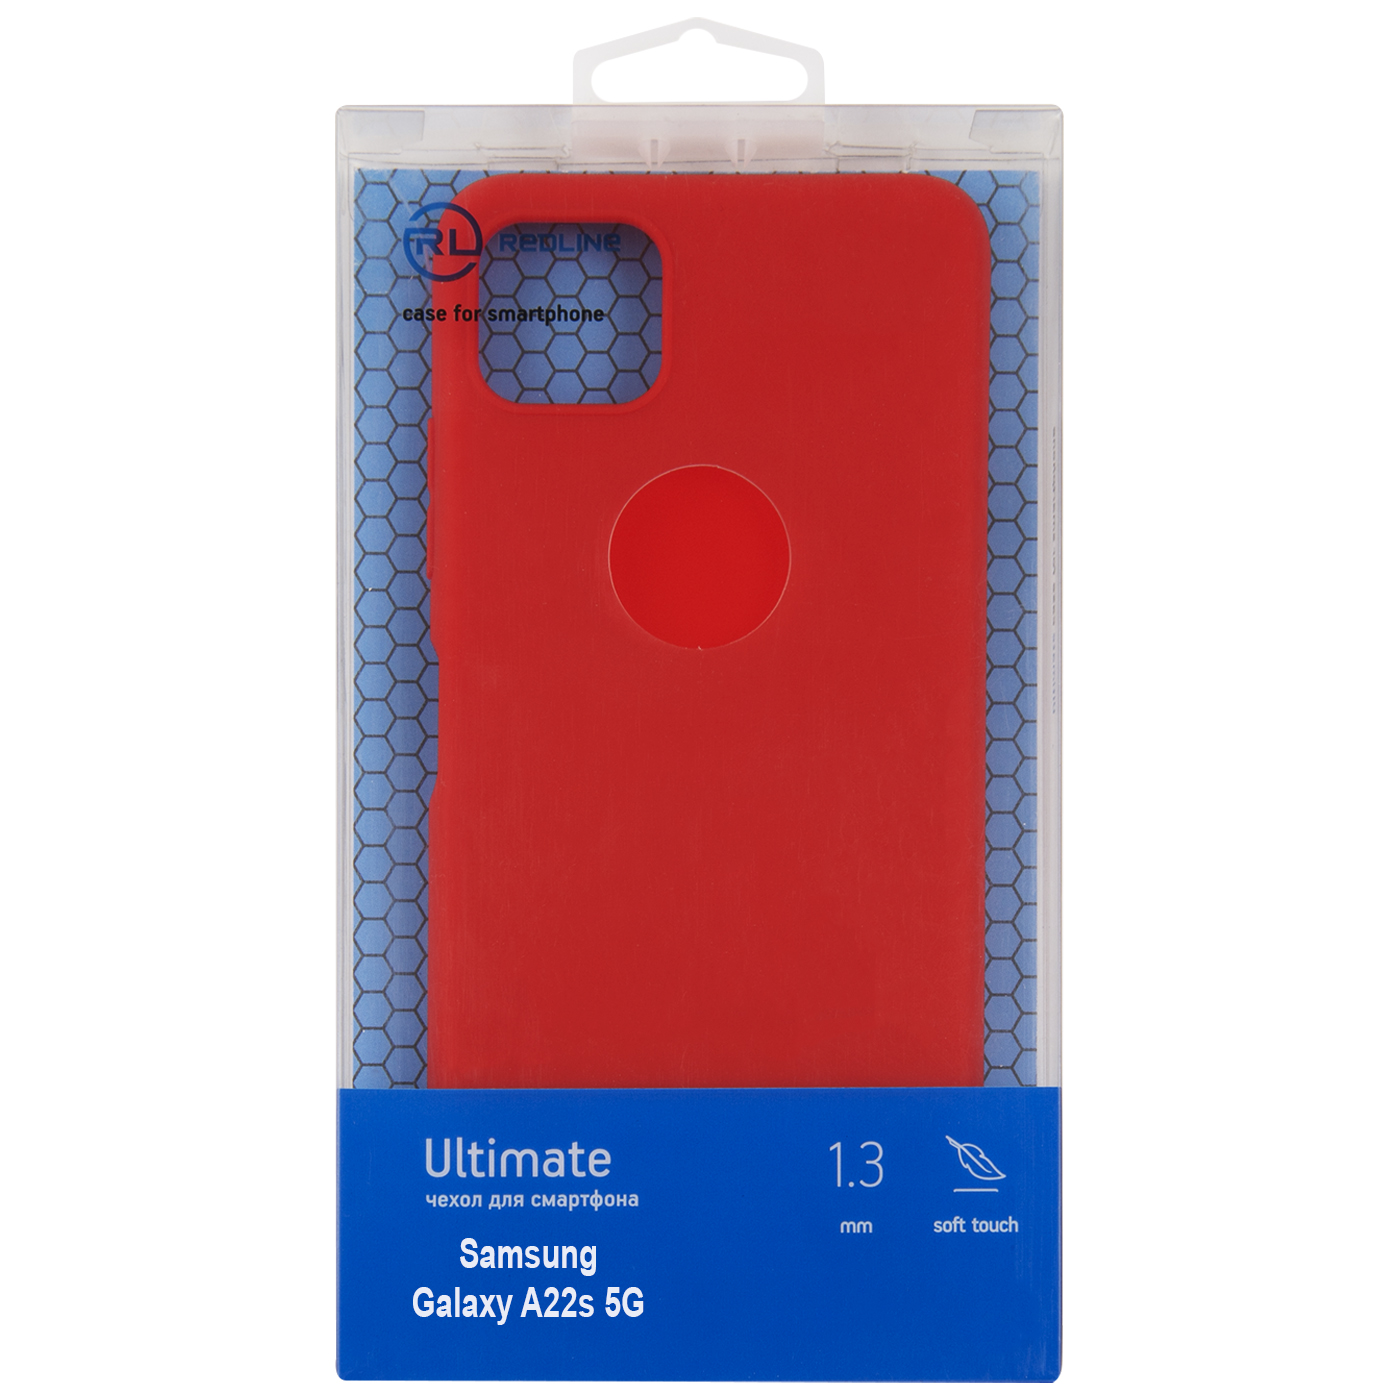 Чехол защитный Red Line Ultimate для Samsung Galaxy A22s 5G, красный УТ000026537 защитный чехол для смартфона red line ultimate для samsung galaxy a22s 5g желтый